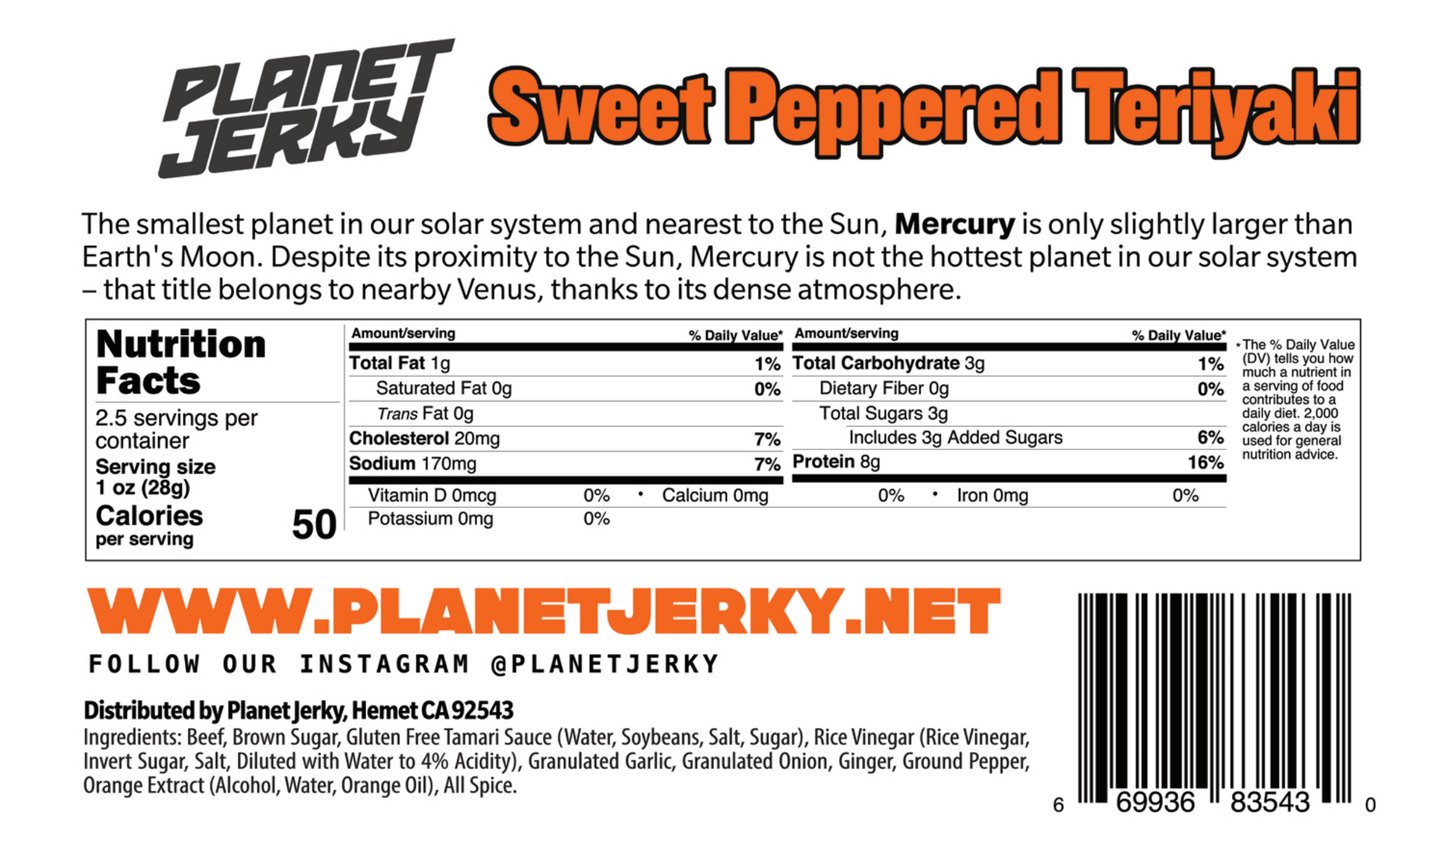 Sweet Peppered Teriyaki "Premium Brisket"